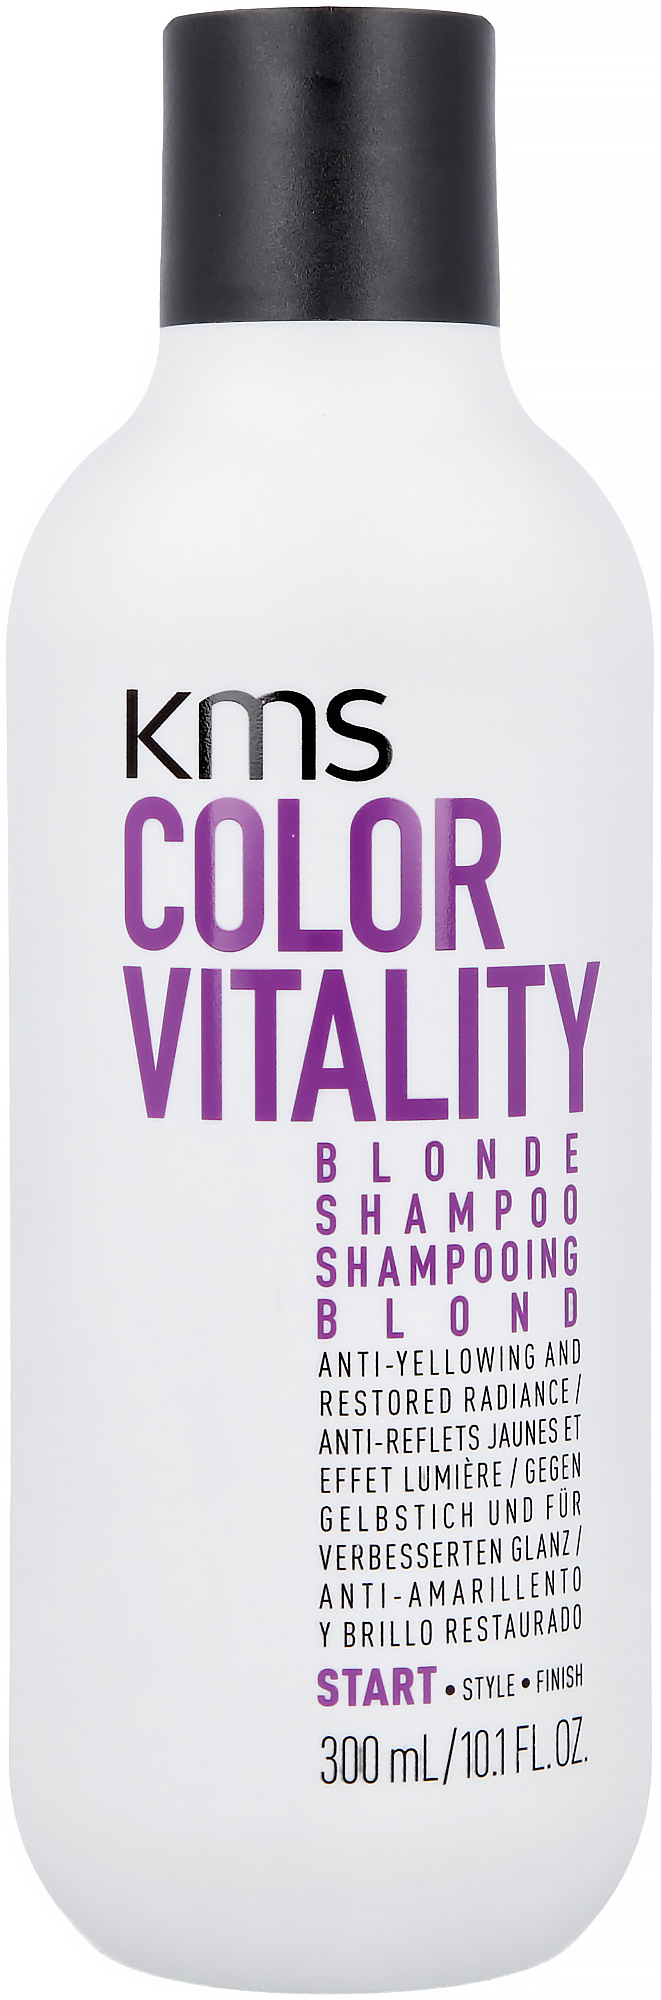 KMS - Color Vitality - Blonde Shampoo - 300 ml